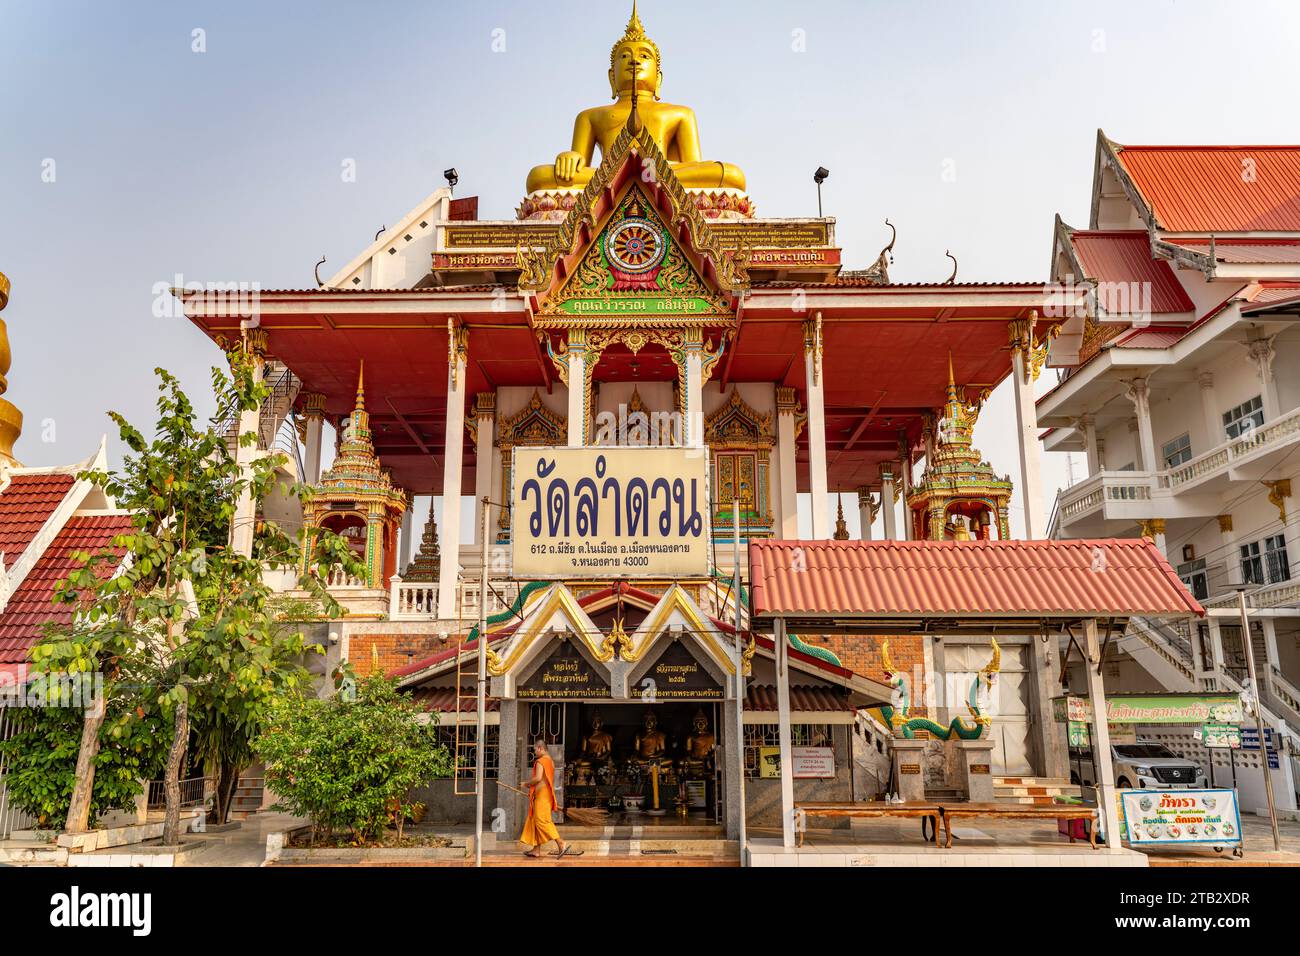 Der buddhistische Tempel Wat Lam Duan in Nong Khai, Thailand, Asien   |  Wat Lam Duan buddhist temple in Nong Khai, Thailand, Asia Stock Photo